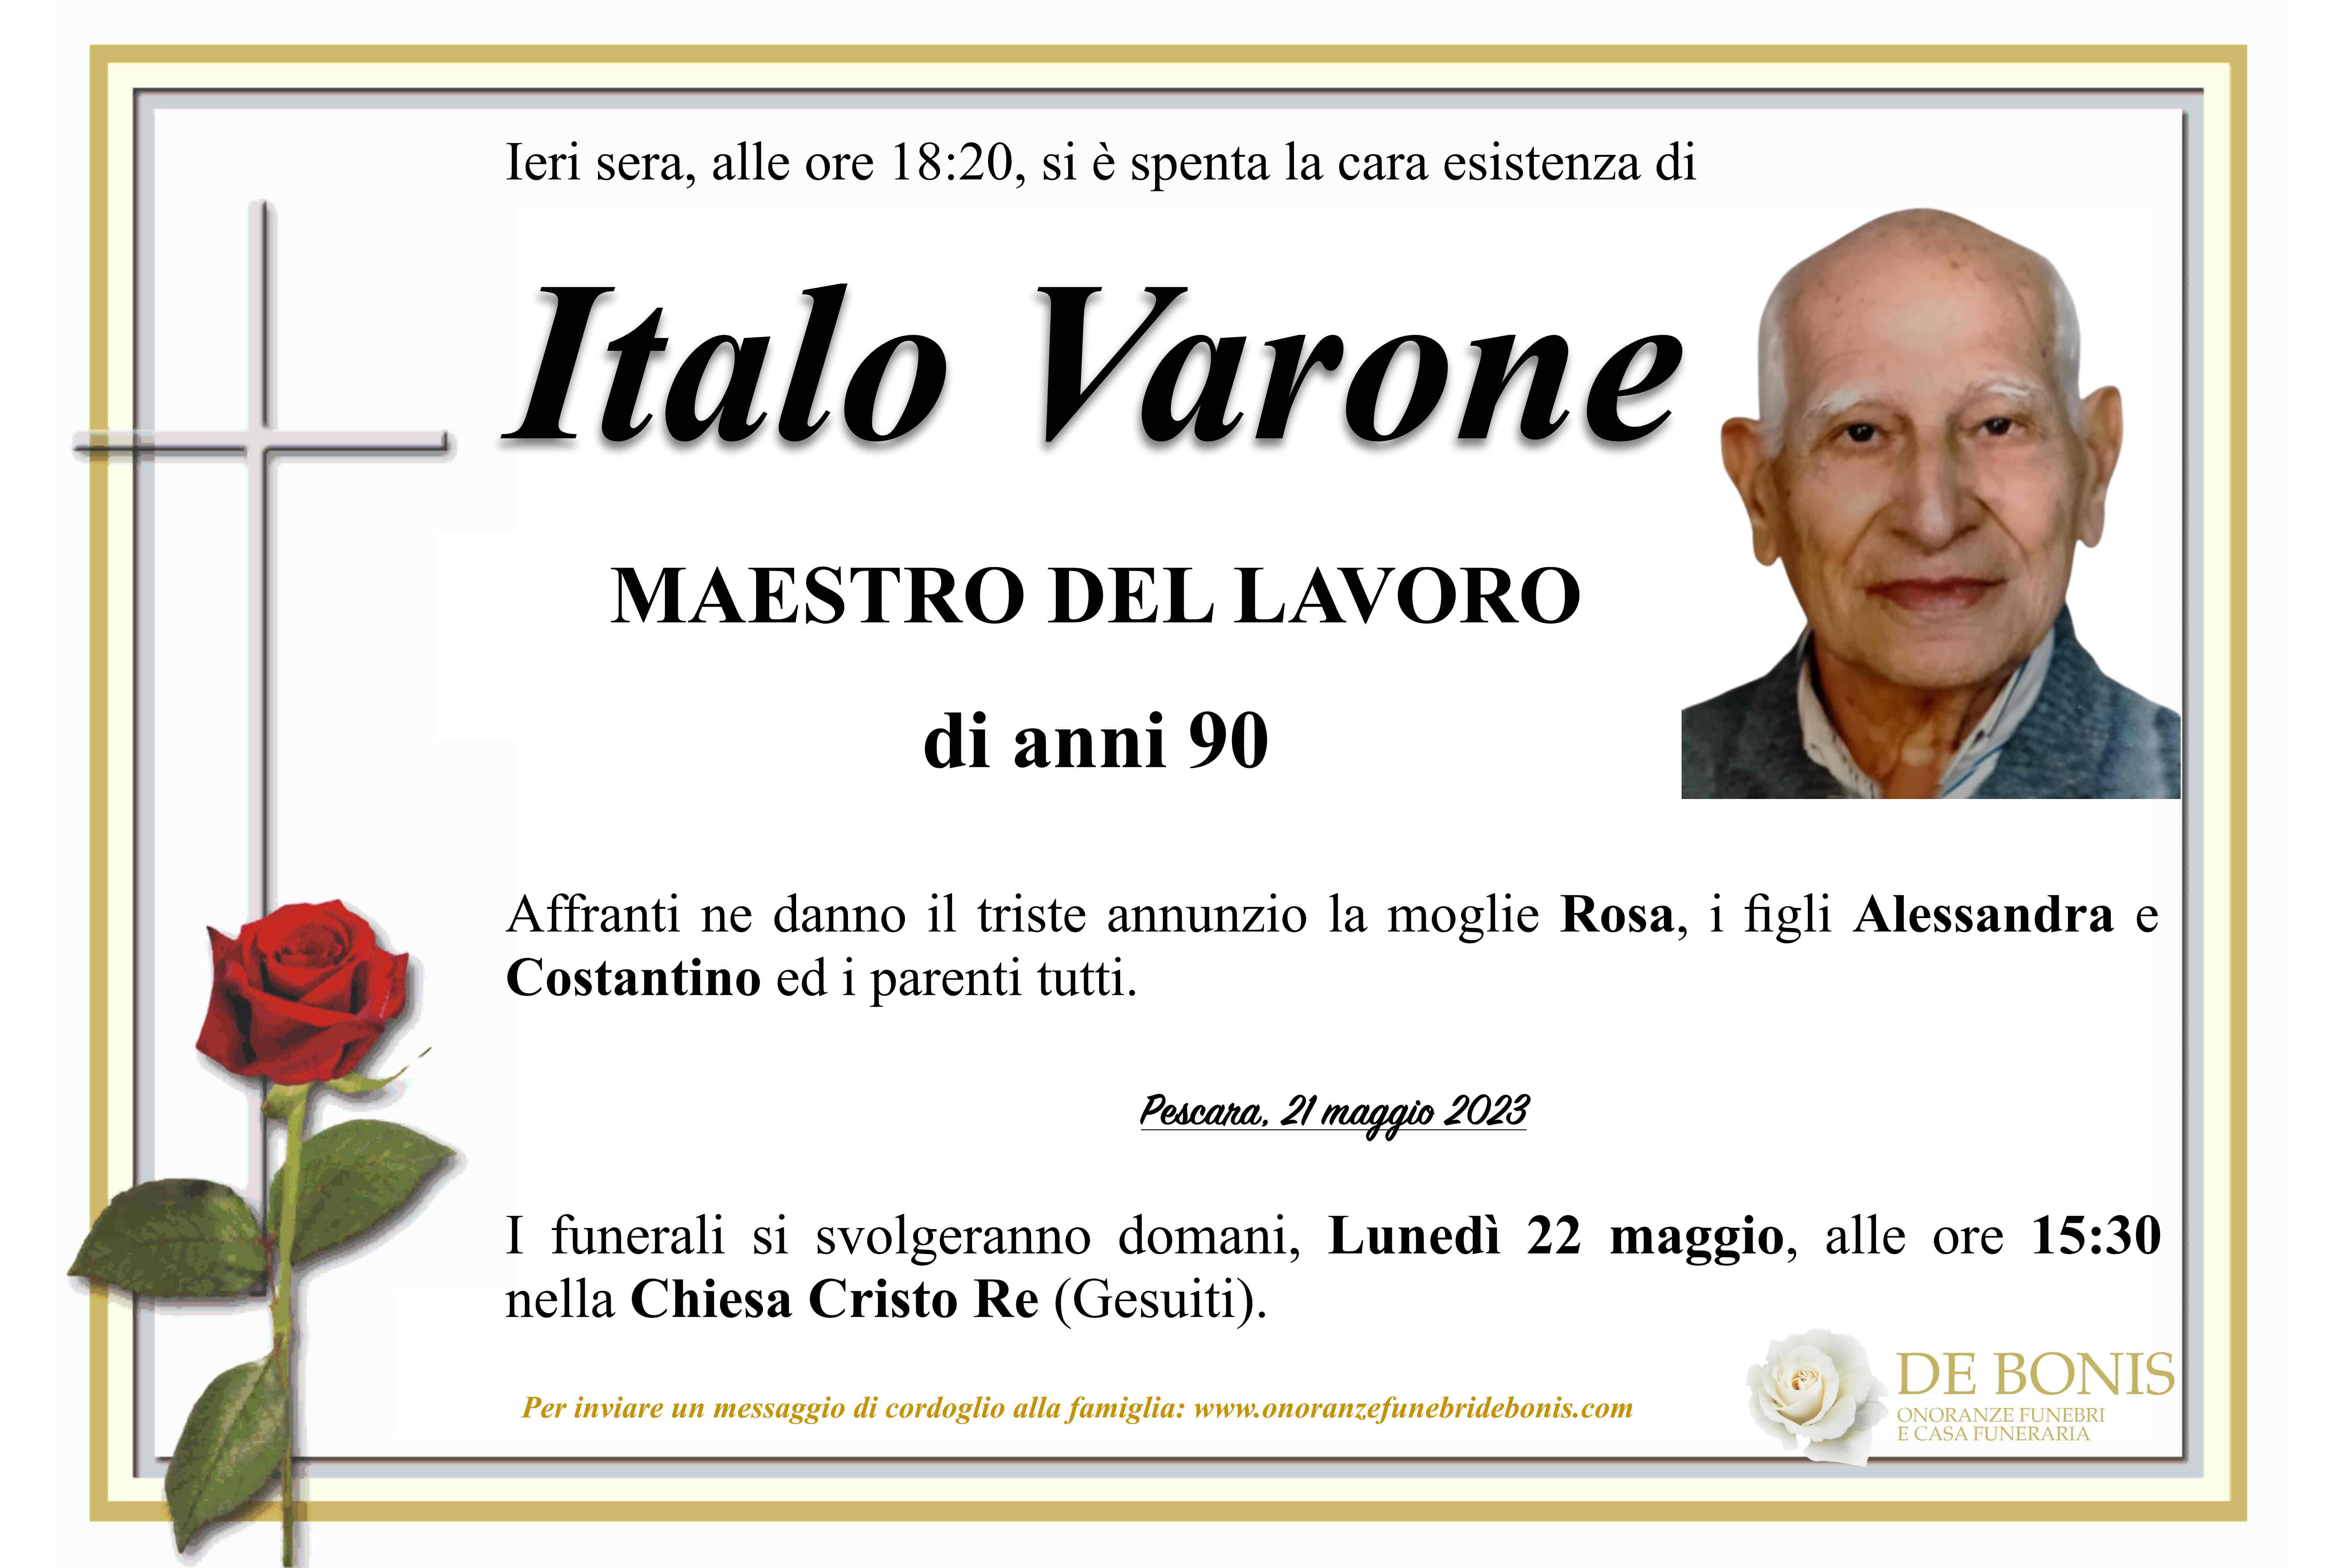 Italo Varone